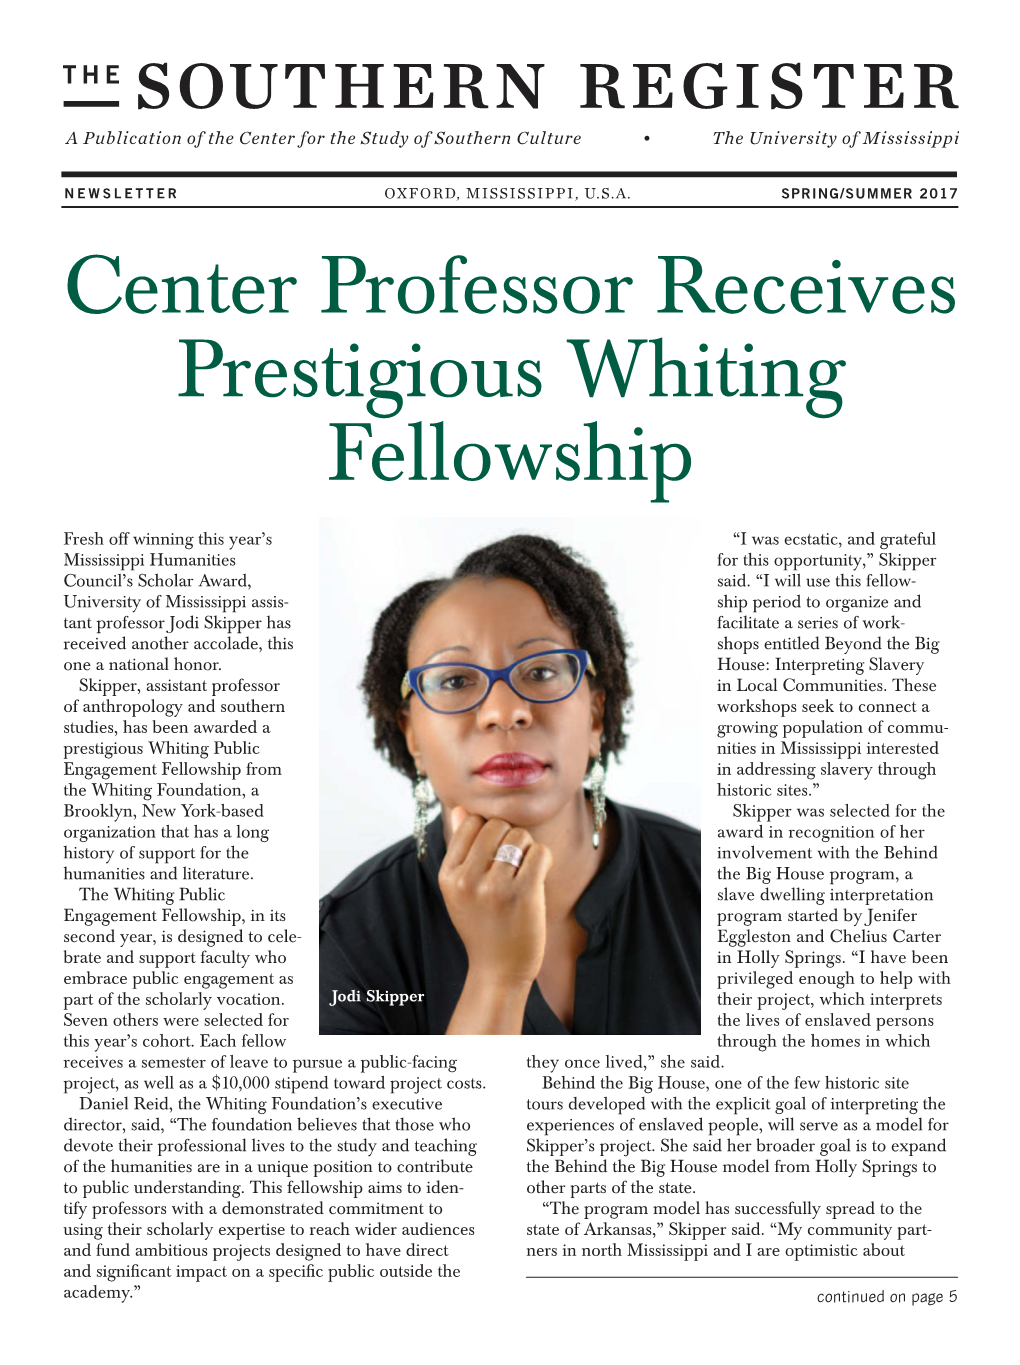 Center Professor Receives Prestigious Whiting Fellowship